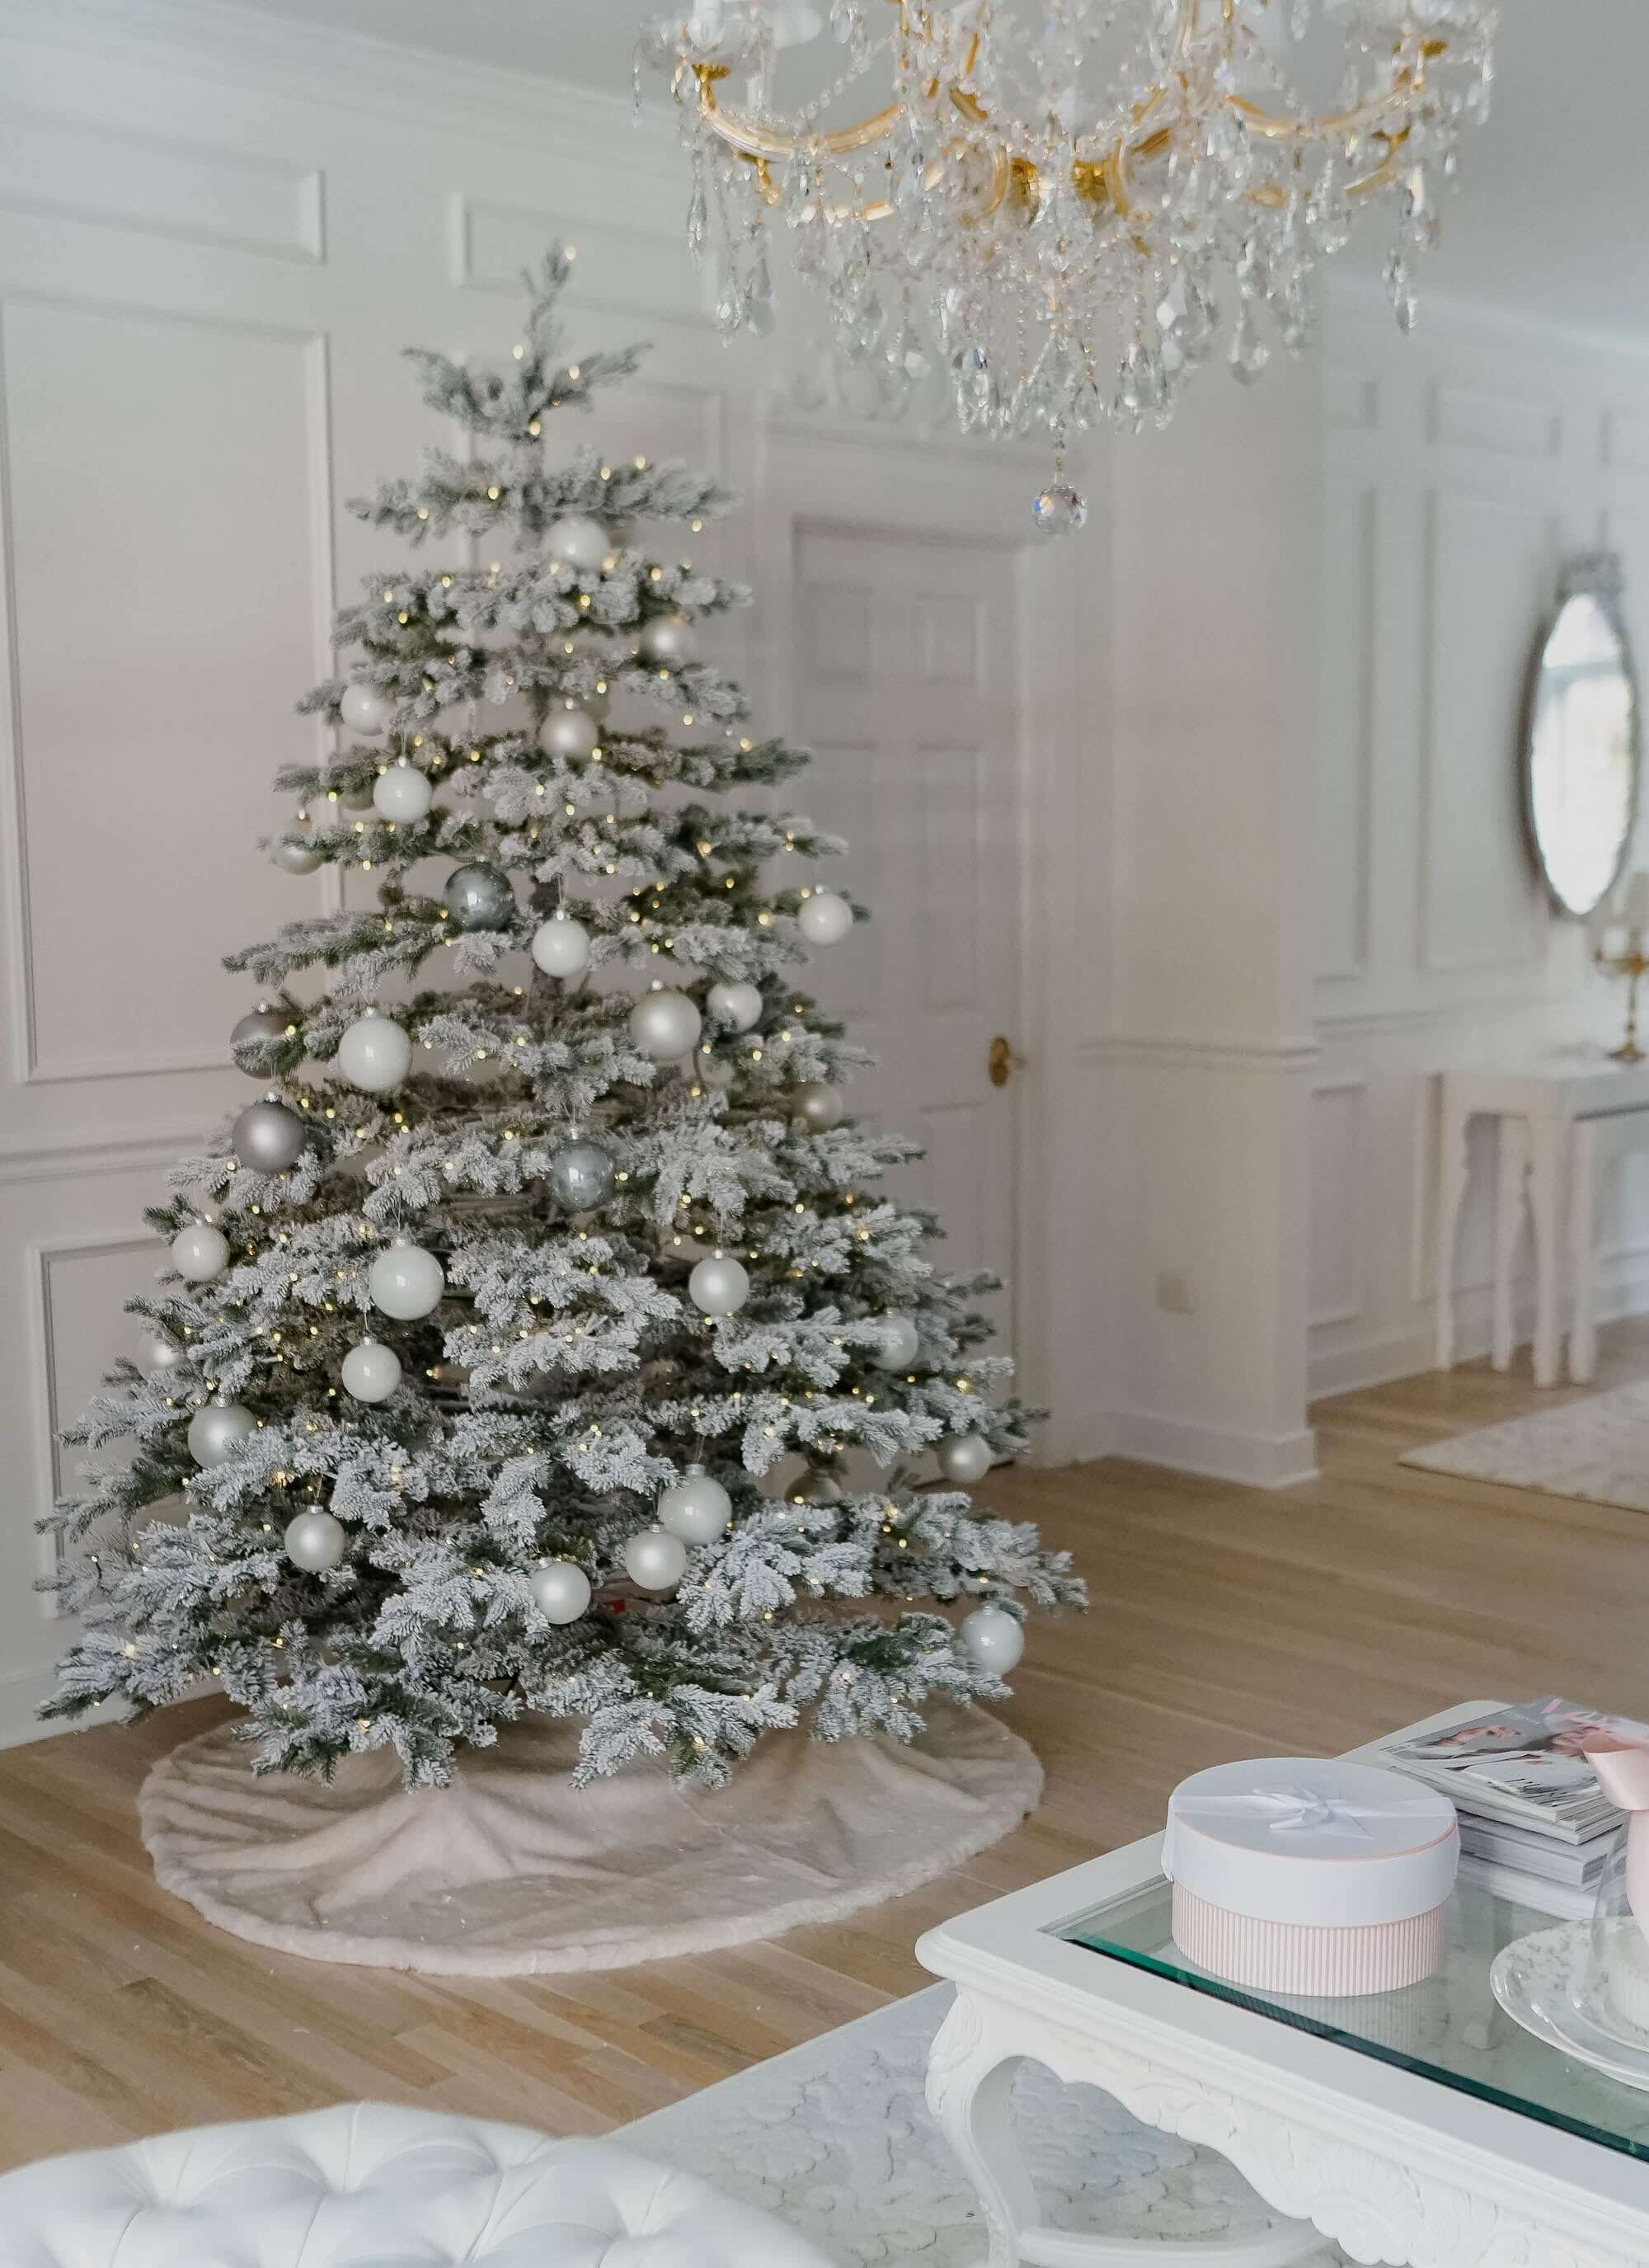 King of Christmas 7.5' Rushmore Flock Quick-Shape Tree Unlit